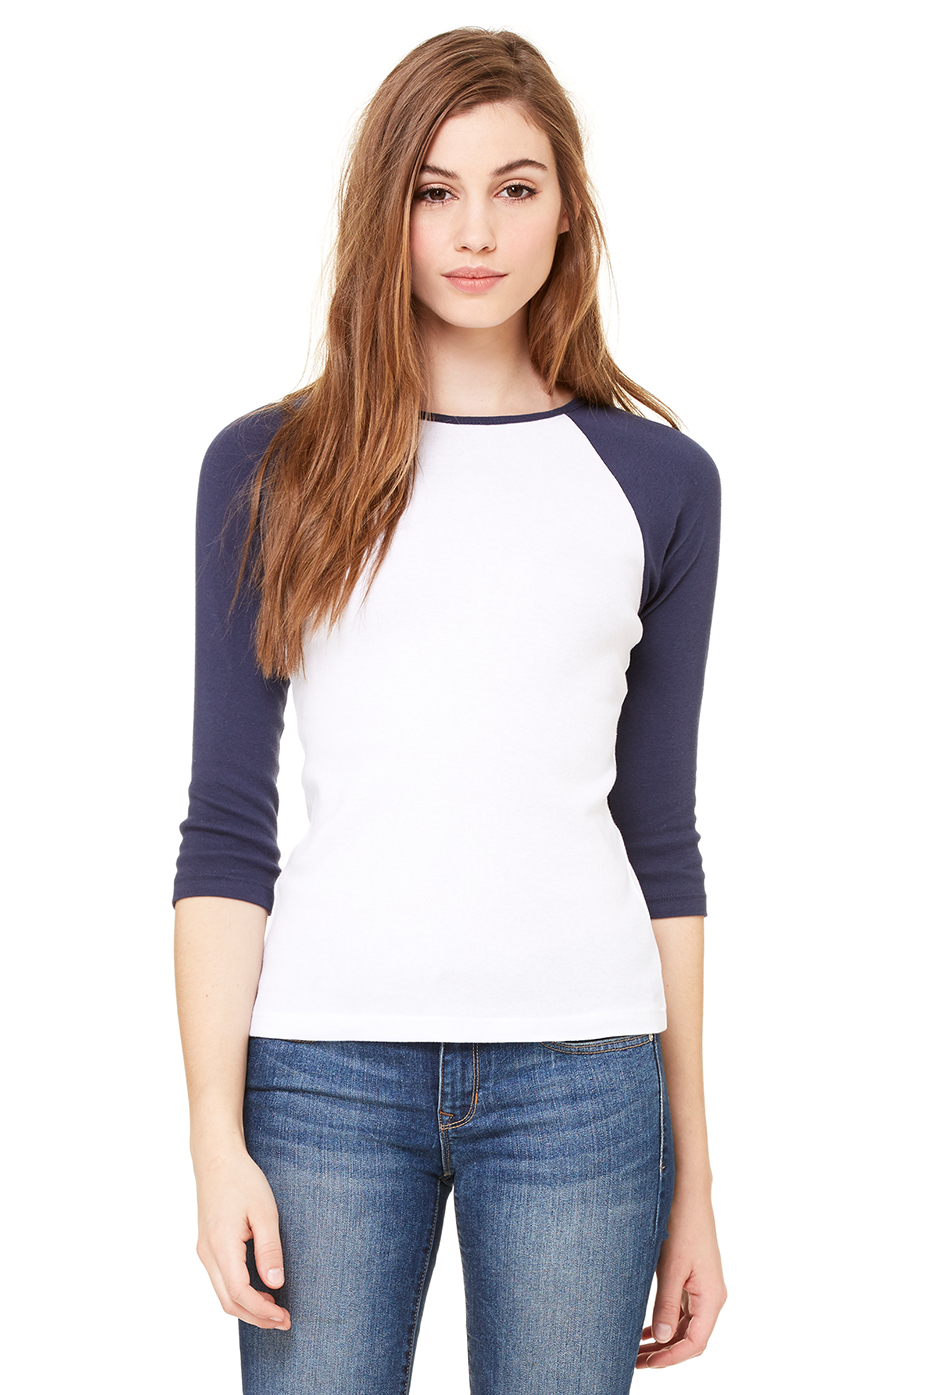 3/4 sleeve Shirts for Women baby rib 3/4 slv ctrst raglan | bella-canvas | bella canvas NEHDWAN